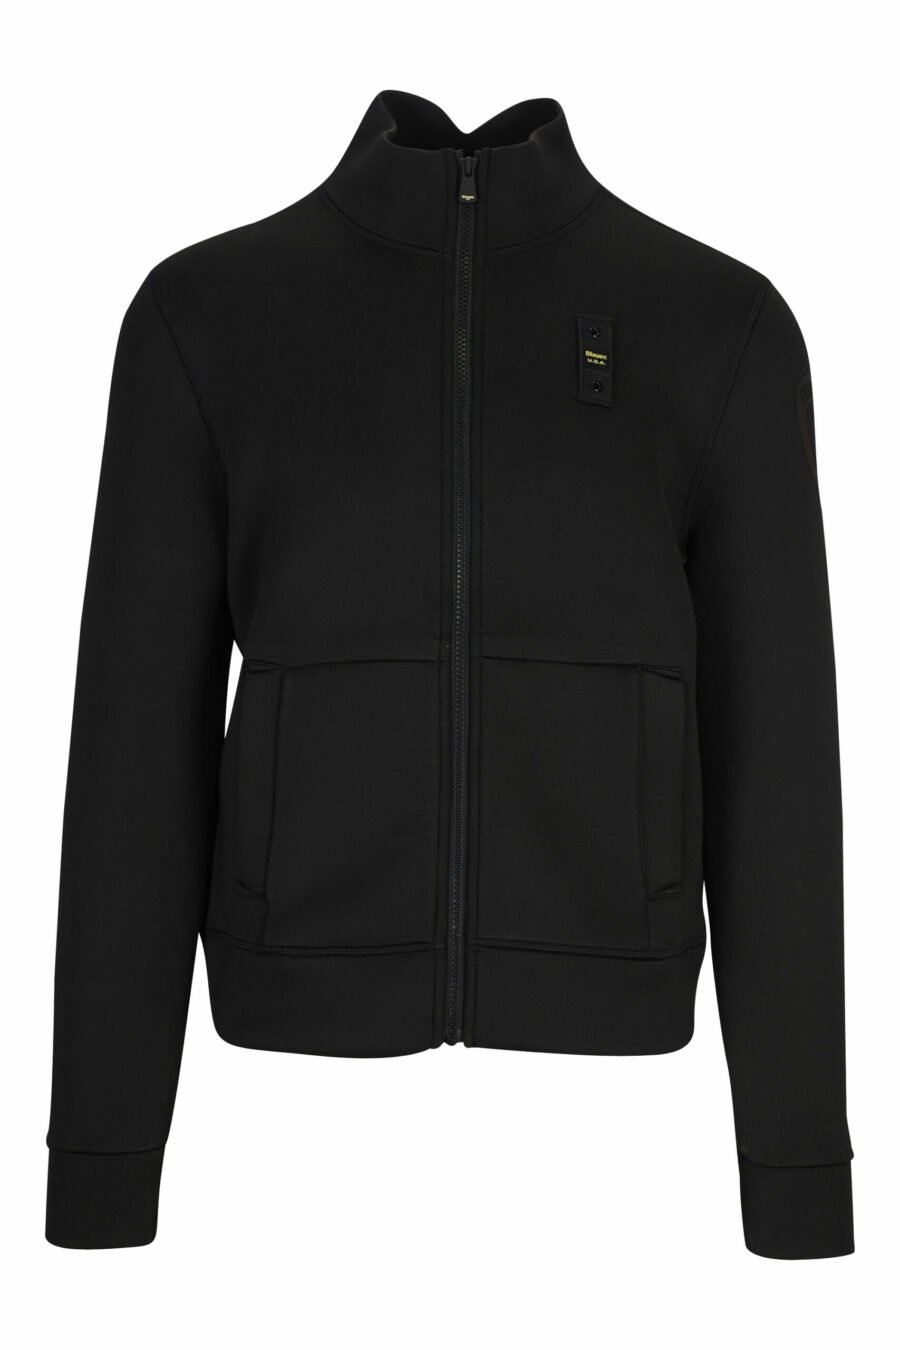 Black zip-up sweatshirt with monochrome logo patch - 8058610660024 scaled